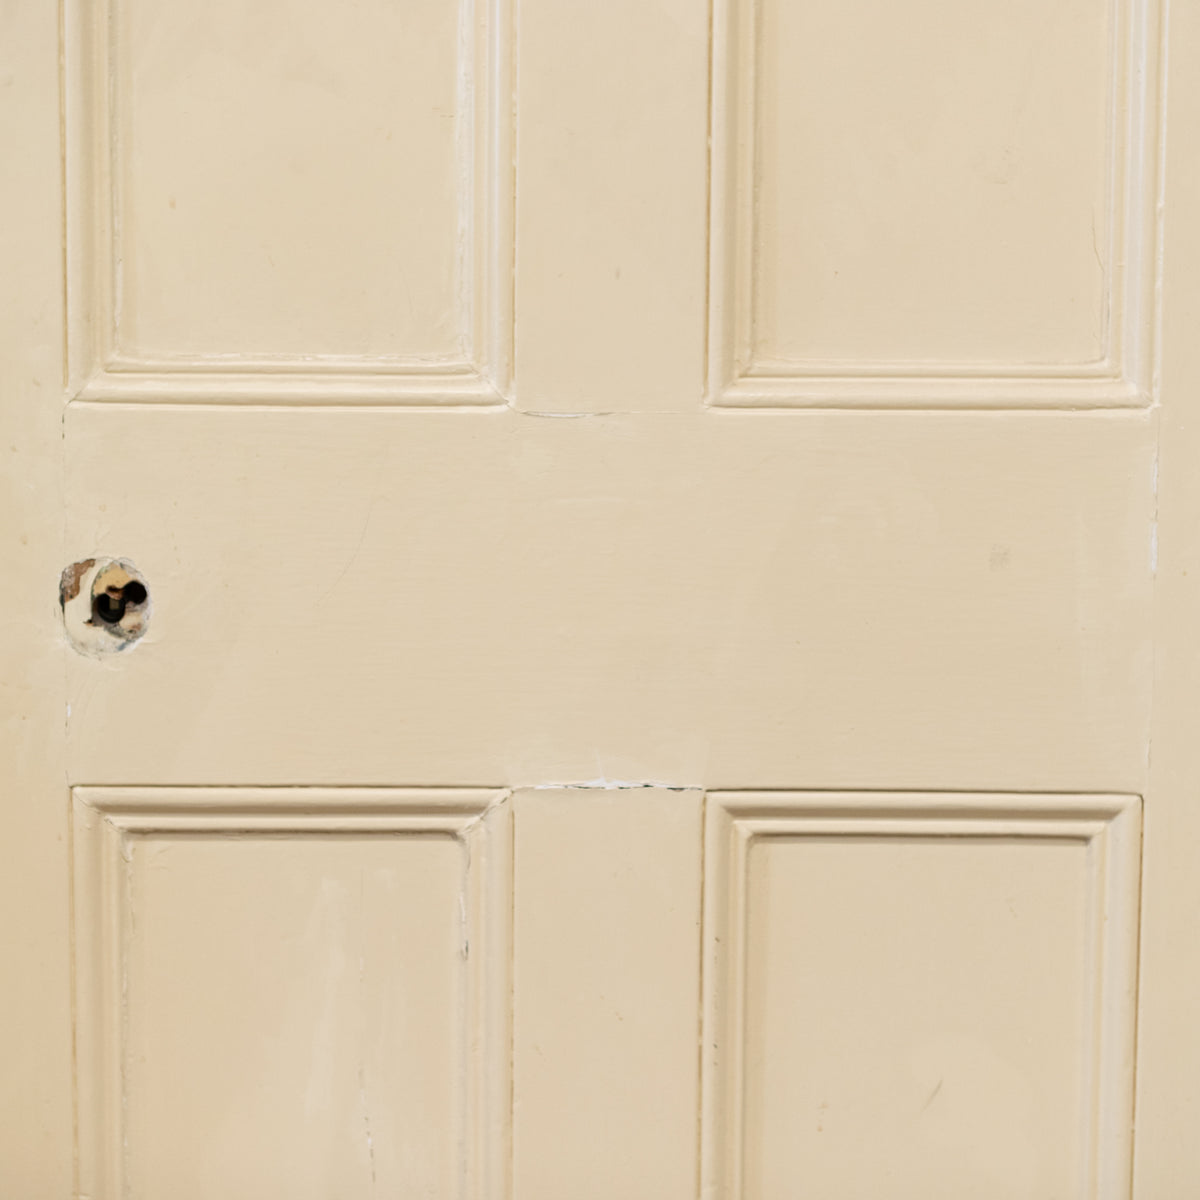 Antique Victorian 4 Panel Door - 196cm x 83cm | The Architectural Forum